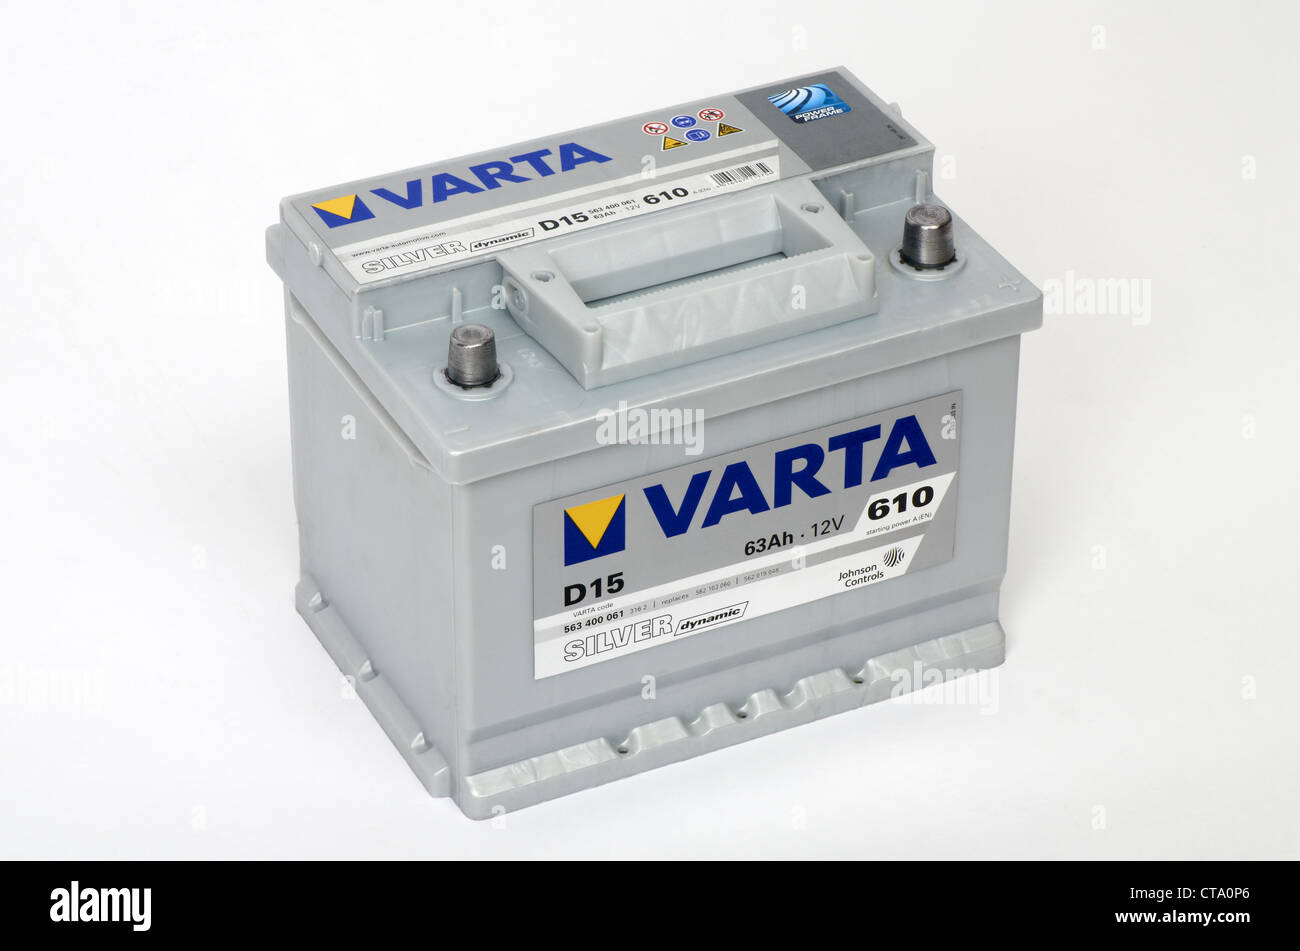 VARTA Silver Dynamic Autobatterie Stockfotografie - Alamy